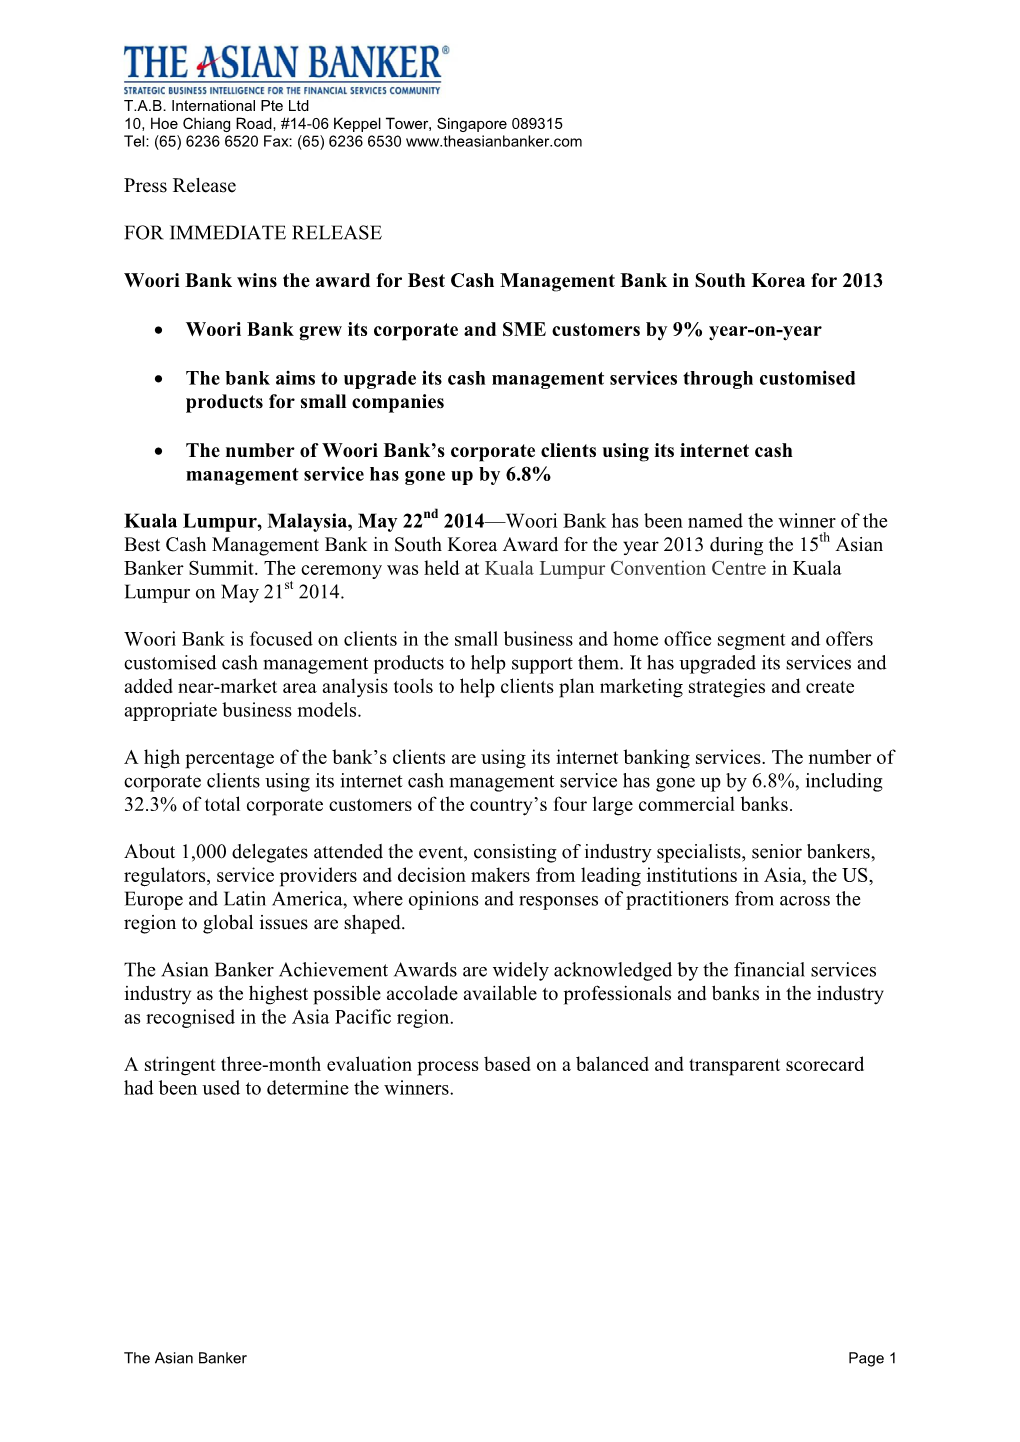 Press Release for IMMEDIATE RELEASE Woori Bank Wins The